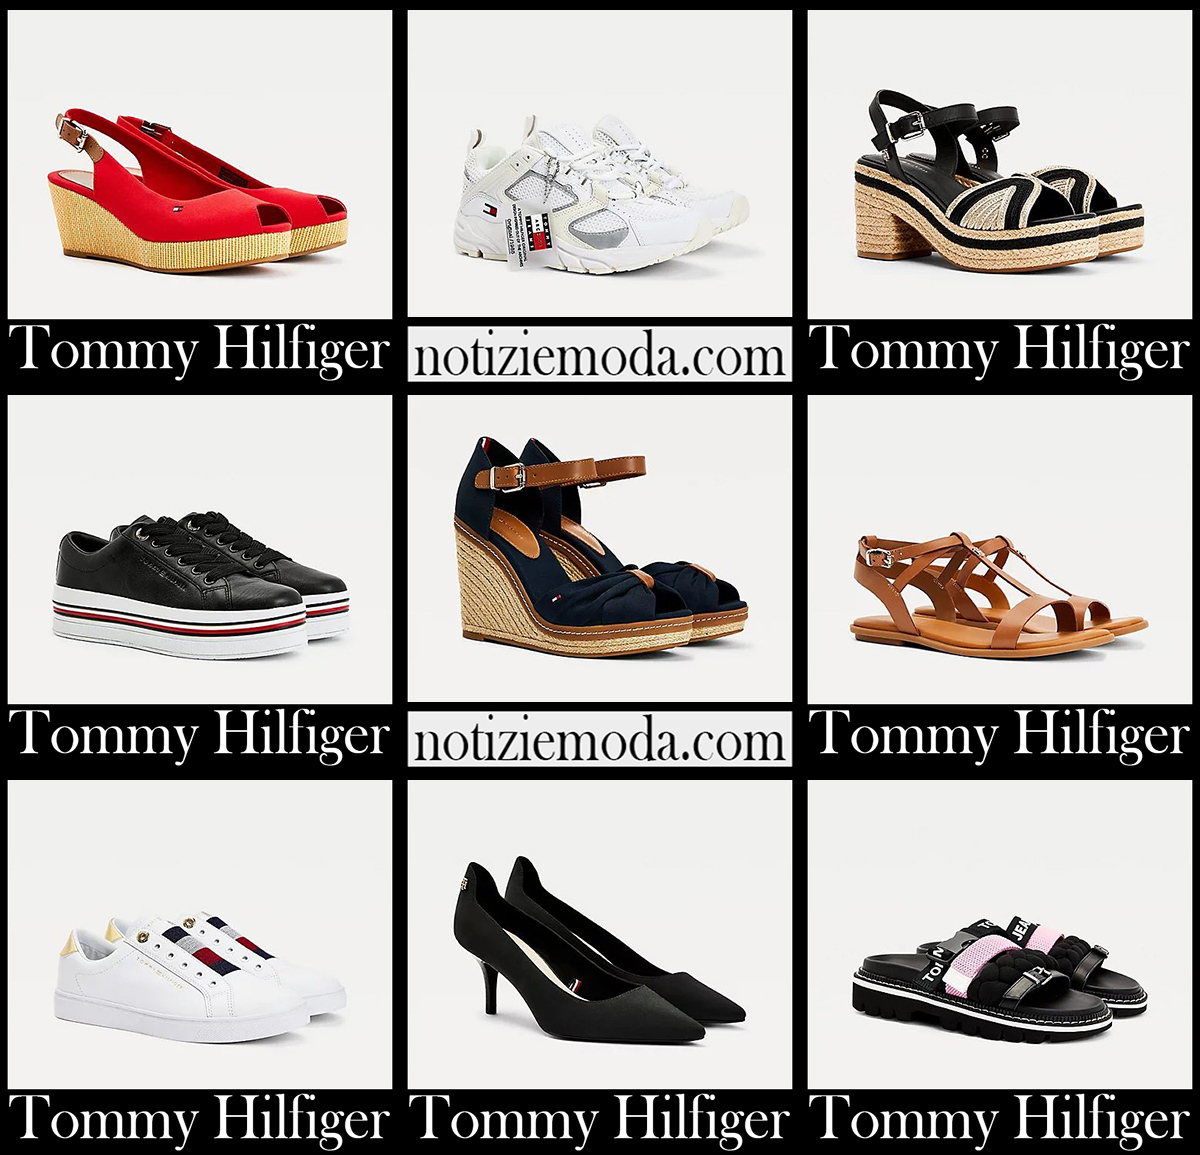 Nuovi arrivi scarpe Tommy Hilfiger 2021 calzature donna